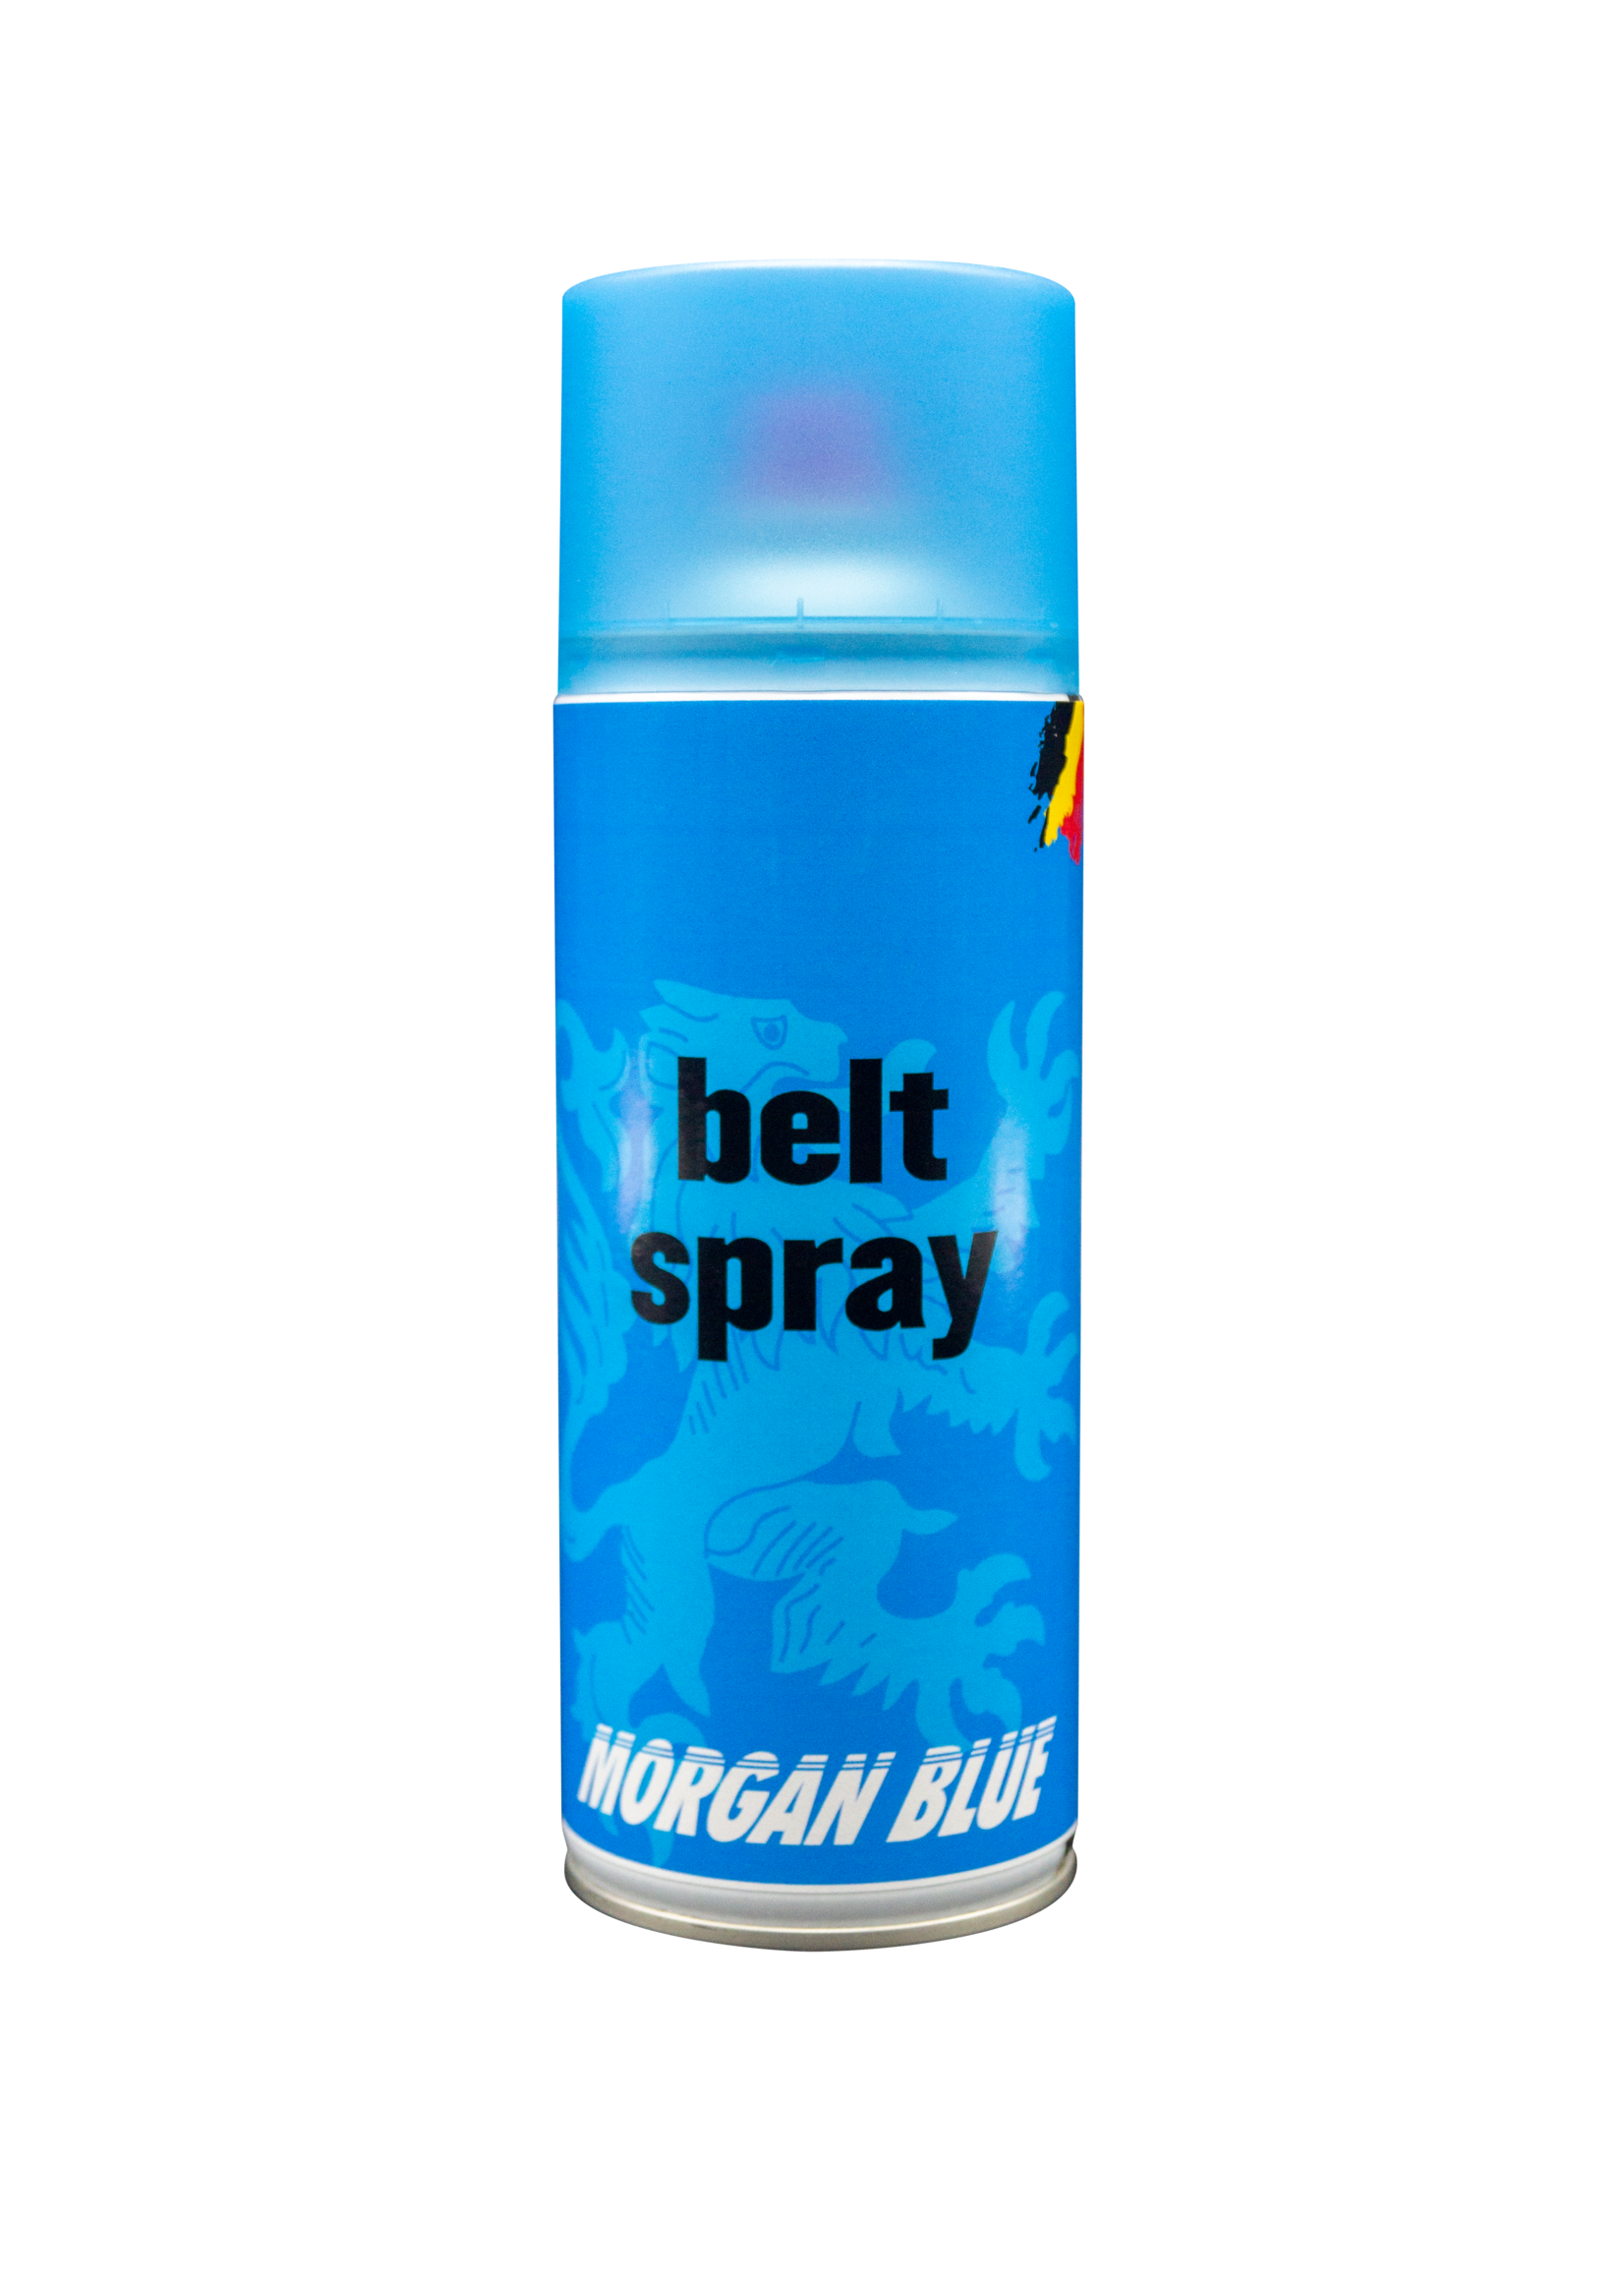 Morgan Blue E-Bike Courroie spray